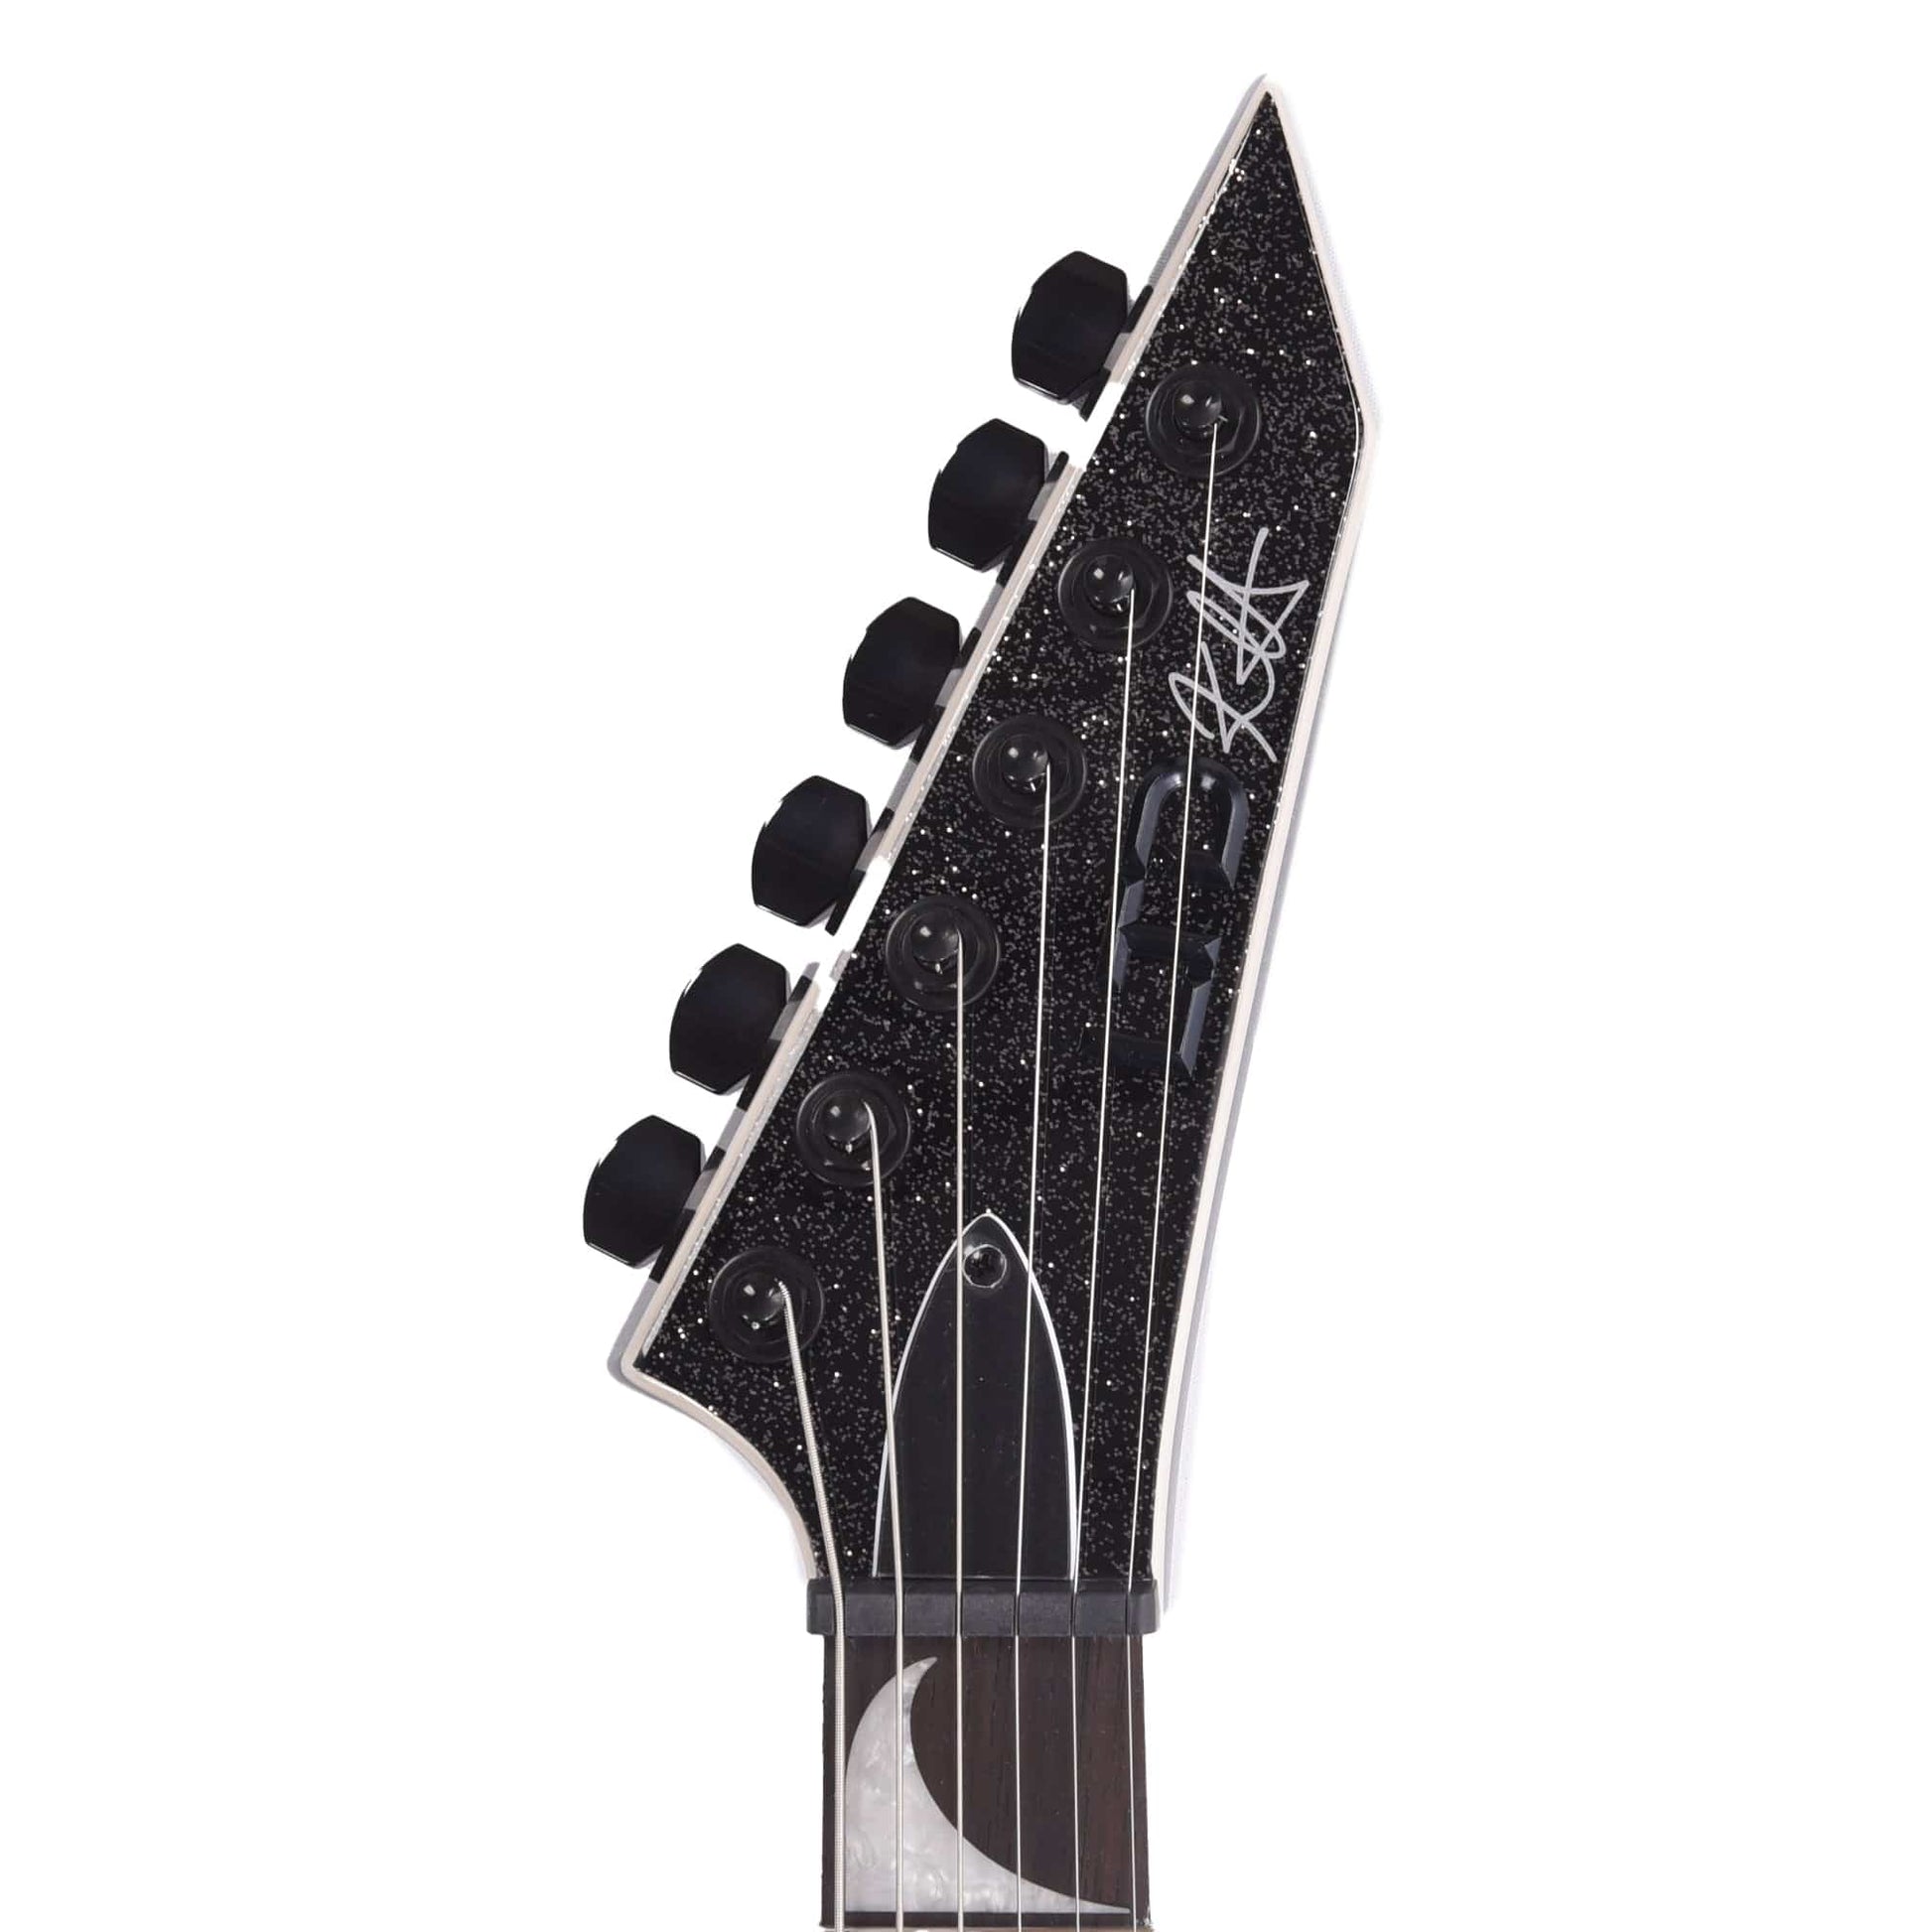 ESP LTD KH-V Kirk Hammett Black Sparkle Electric Guitars / Solid Body